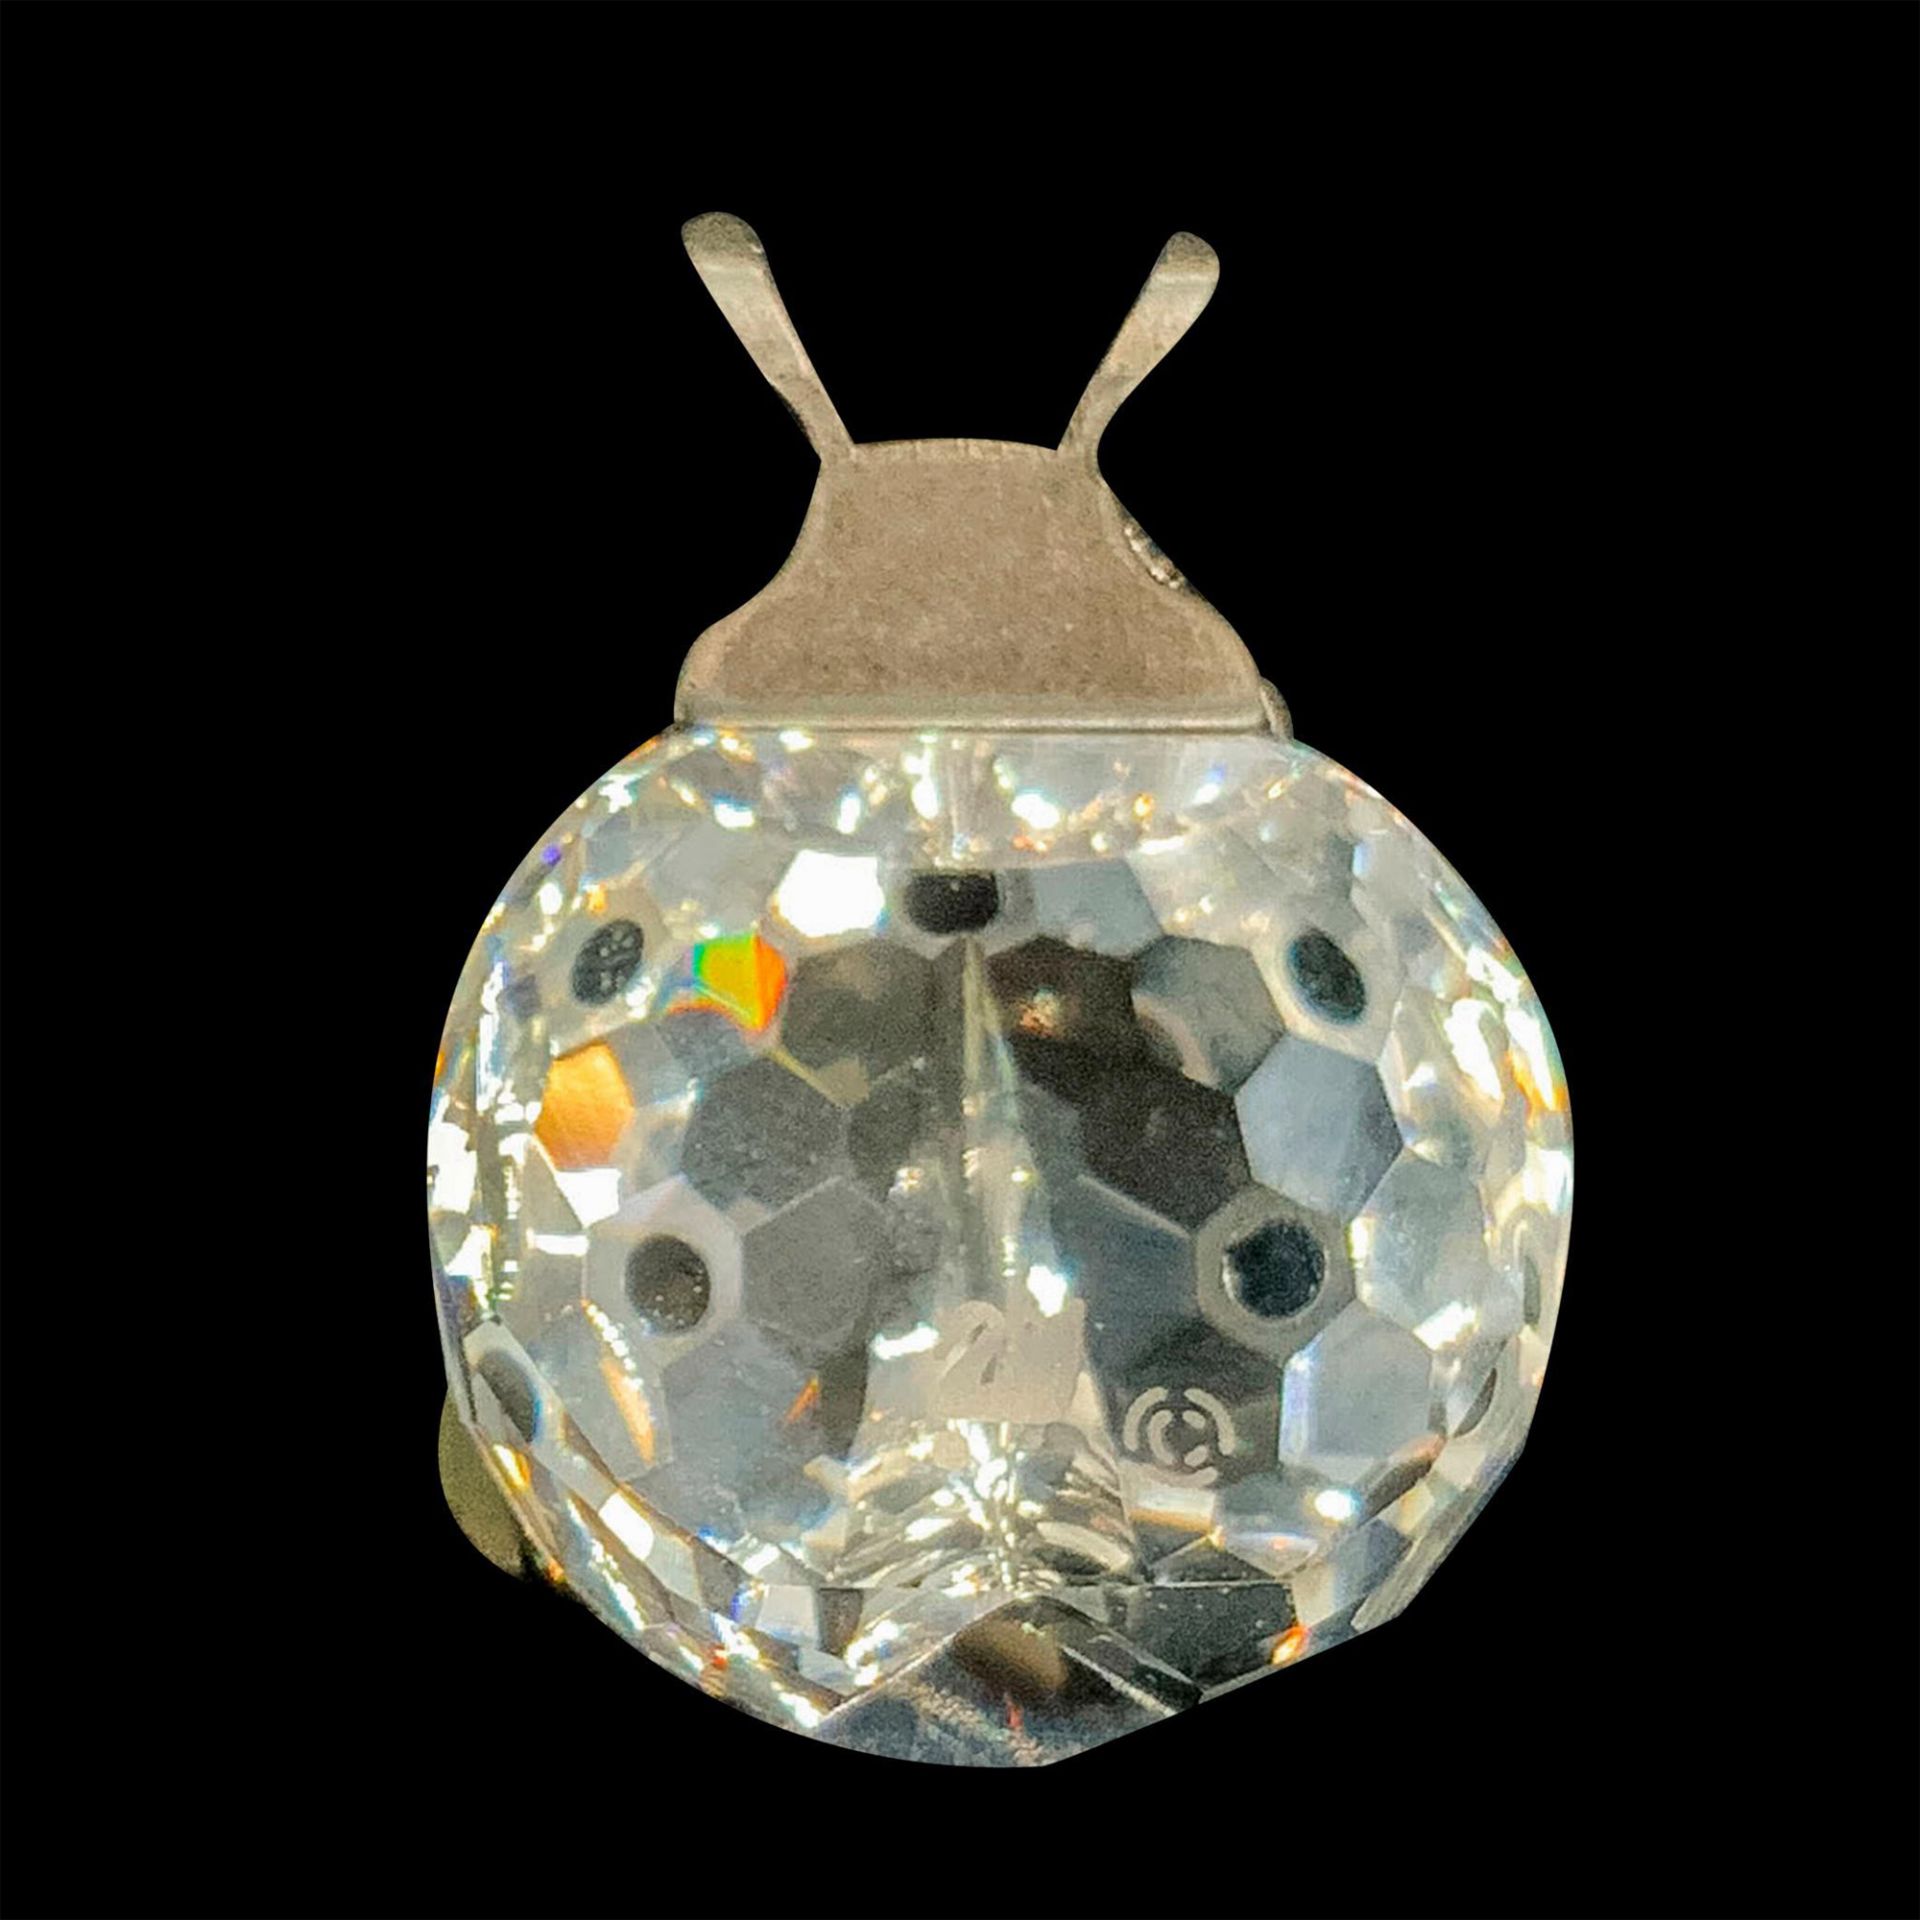 Swarovski Silver Crystal Figurine, Ladybug - Image 2 of 3